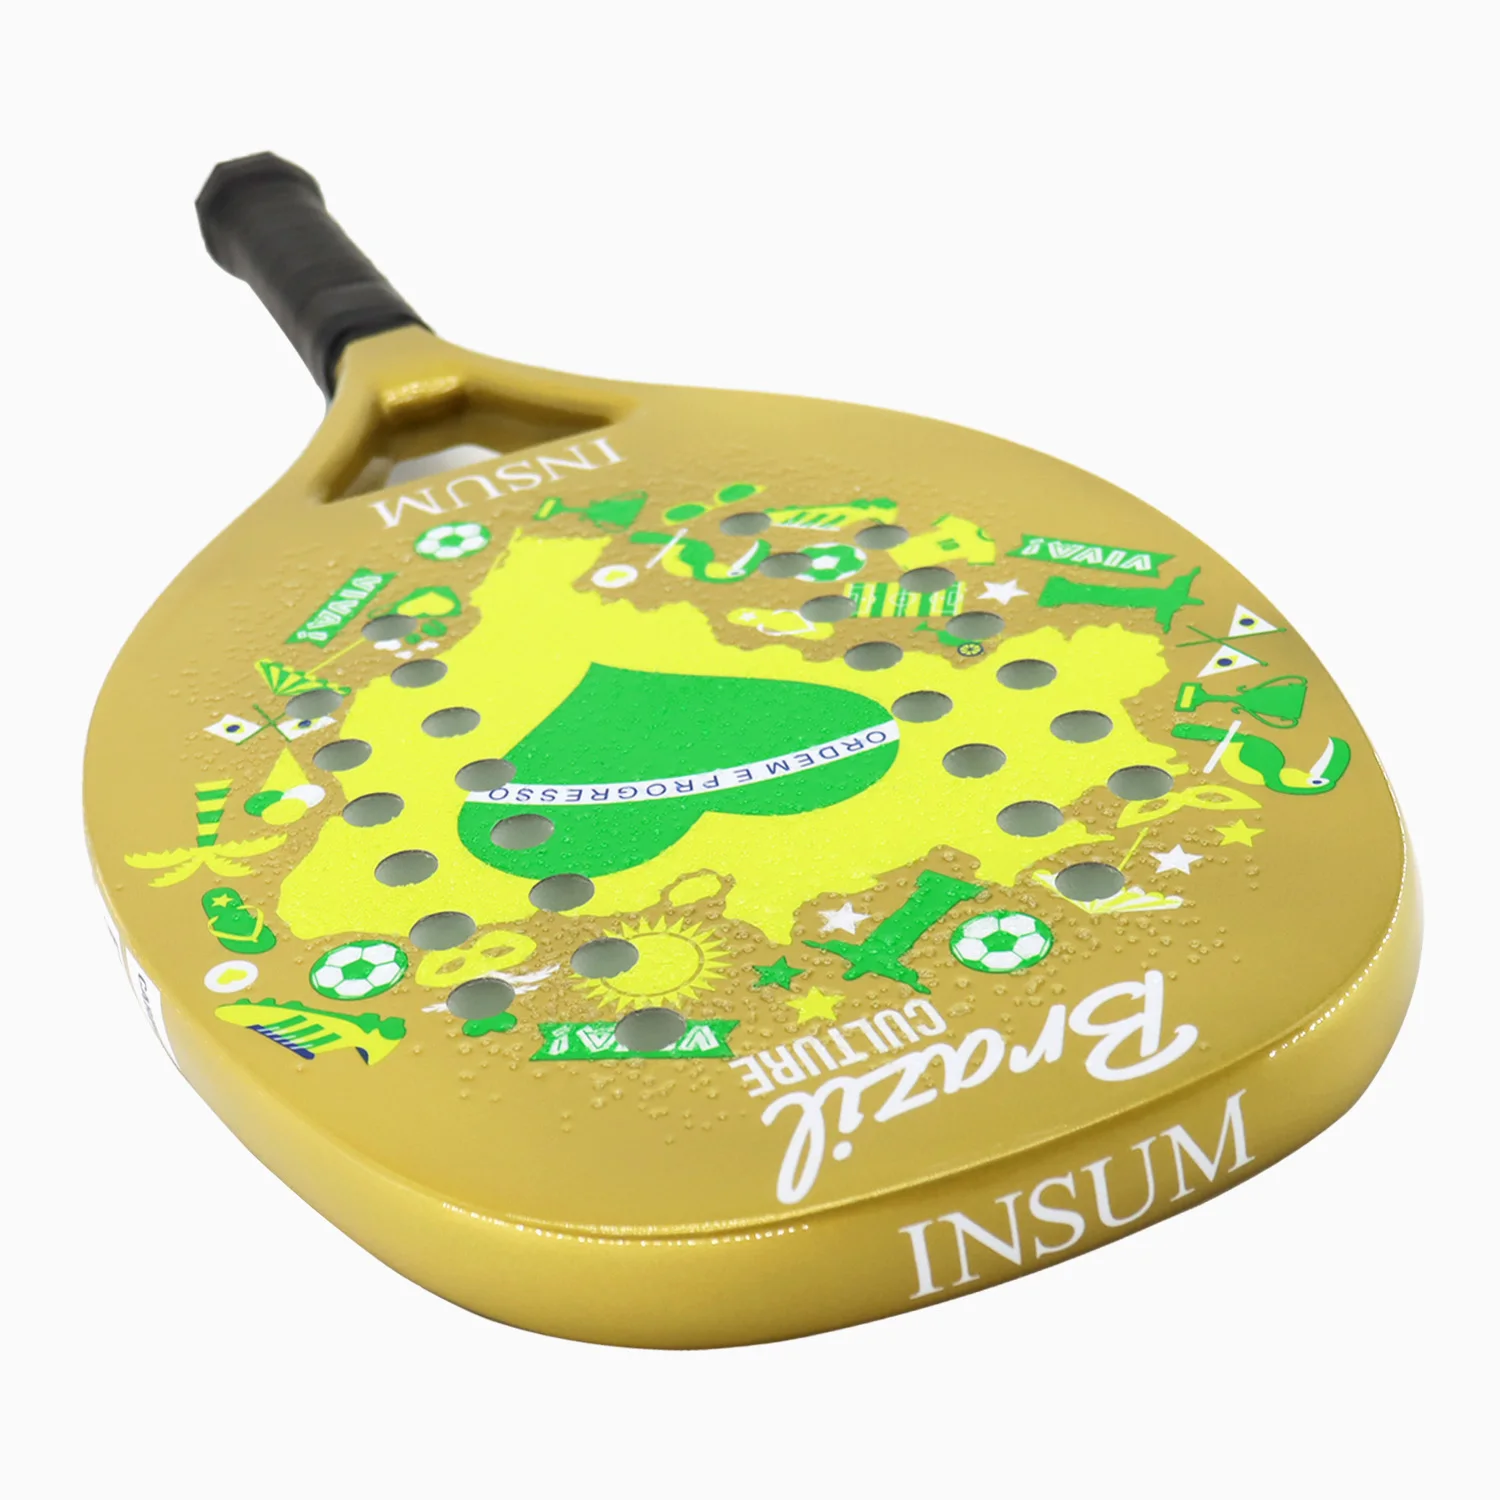 

INSUM Racket Beach Tennis Full Carbon Round Surface for Beginner Tennis Padel Raquete